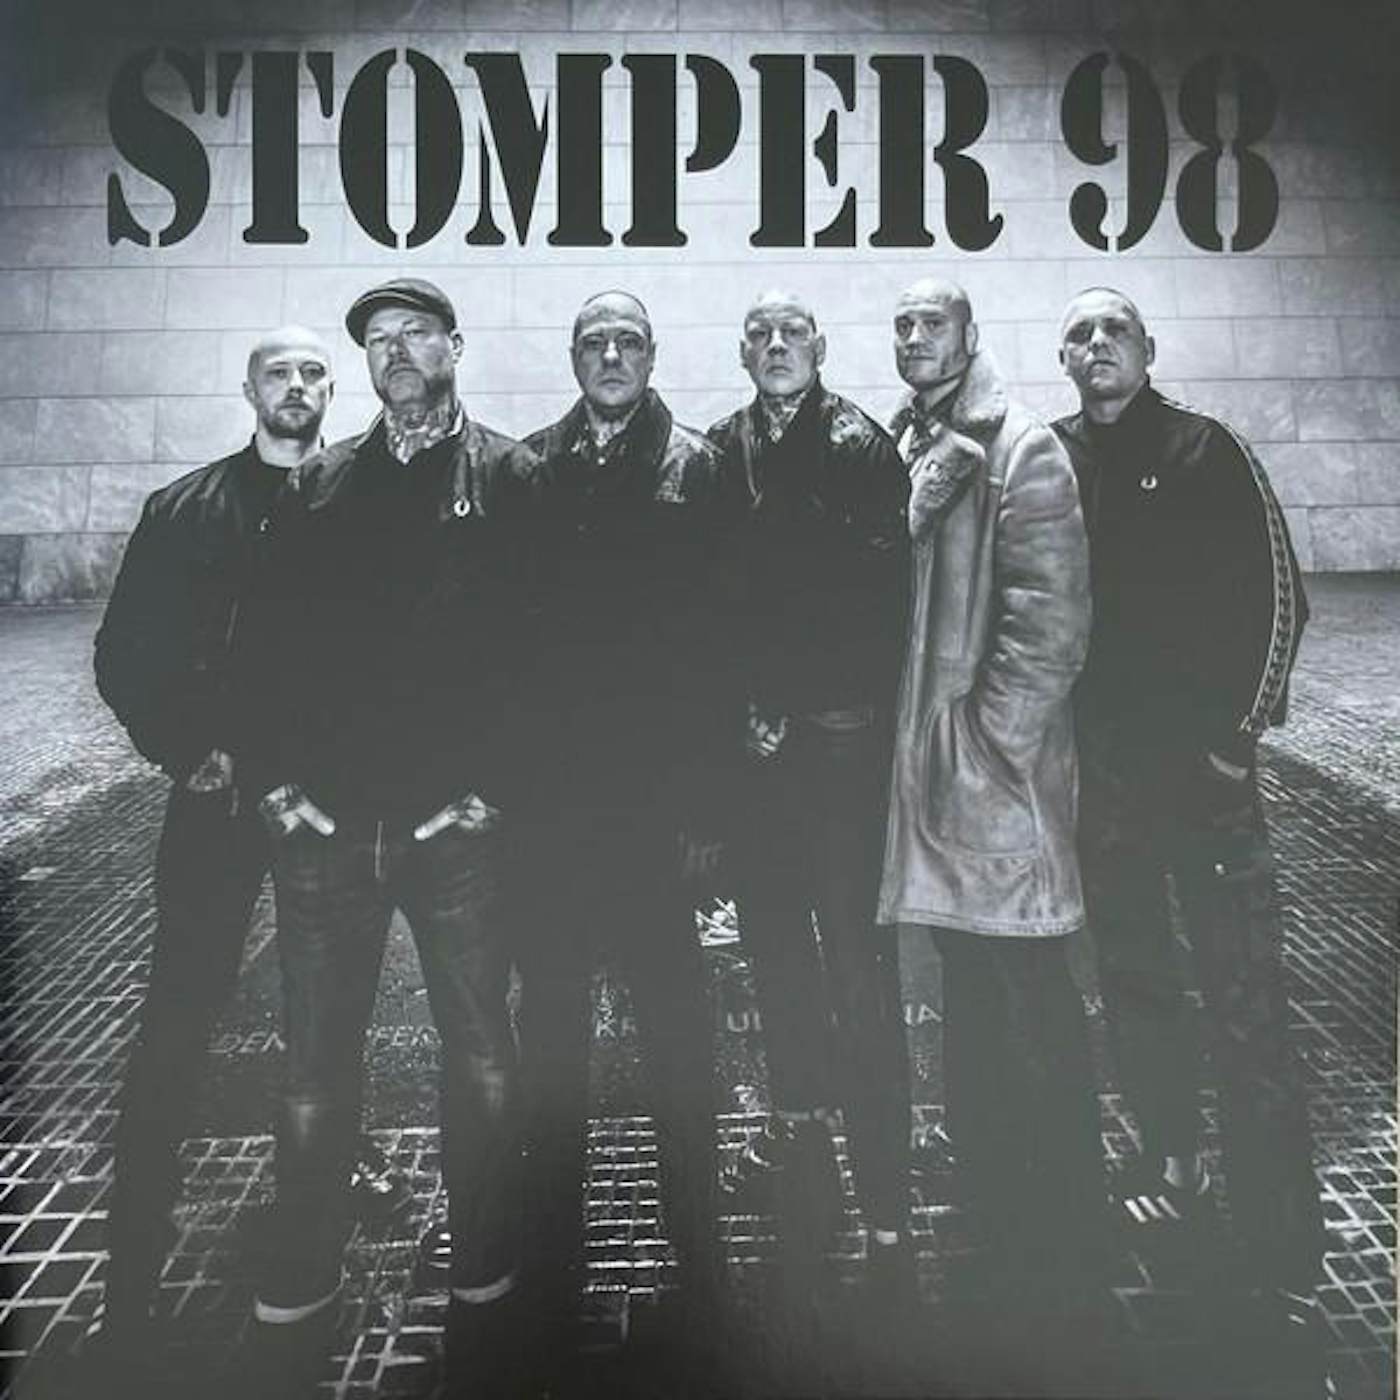 Stomper 98 (Black Ice) Vinyl Record